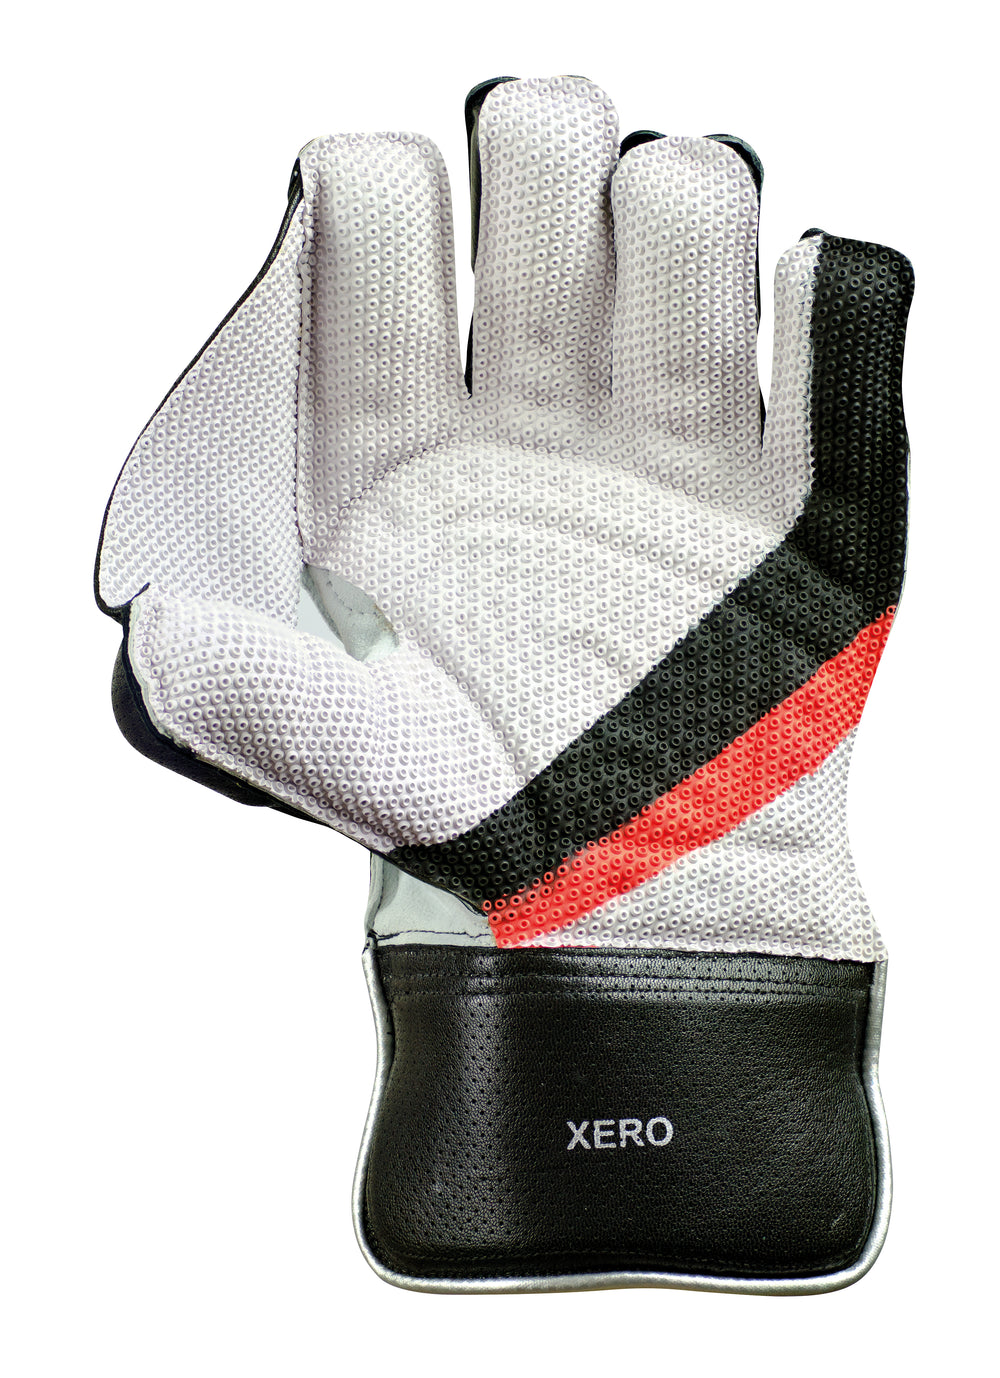 Hunts County Xero Wicket Keeping Gloves